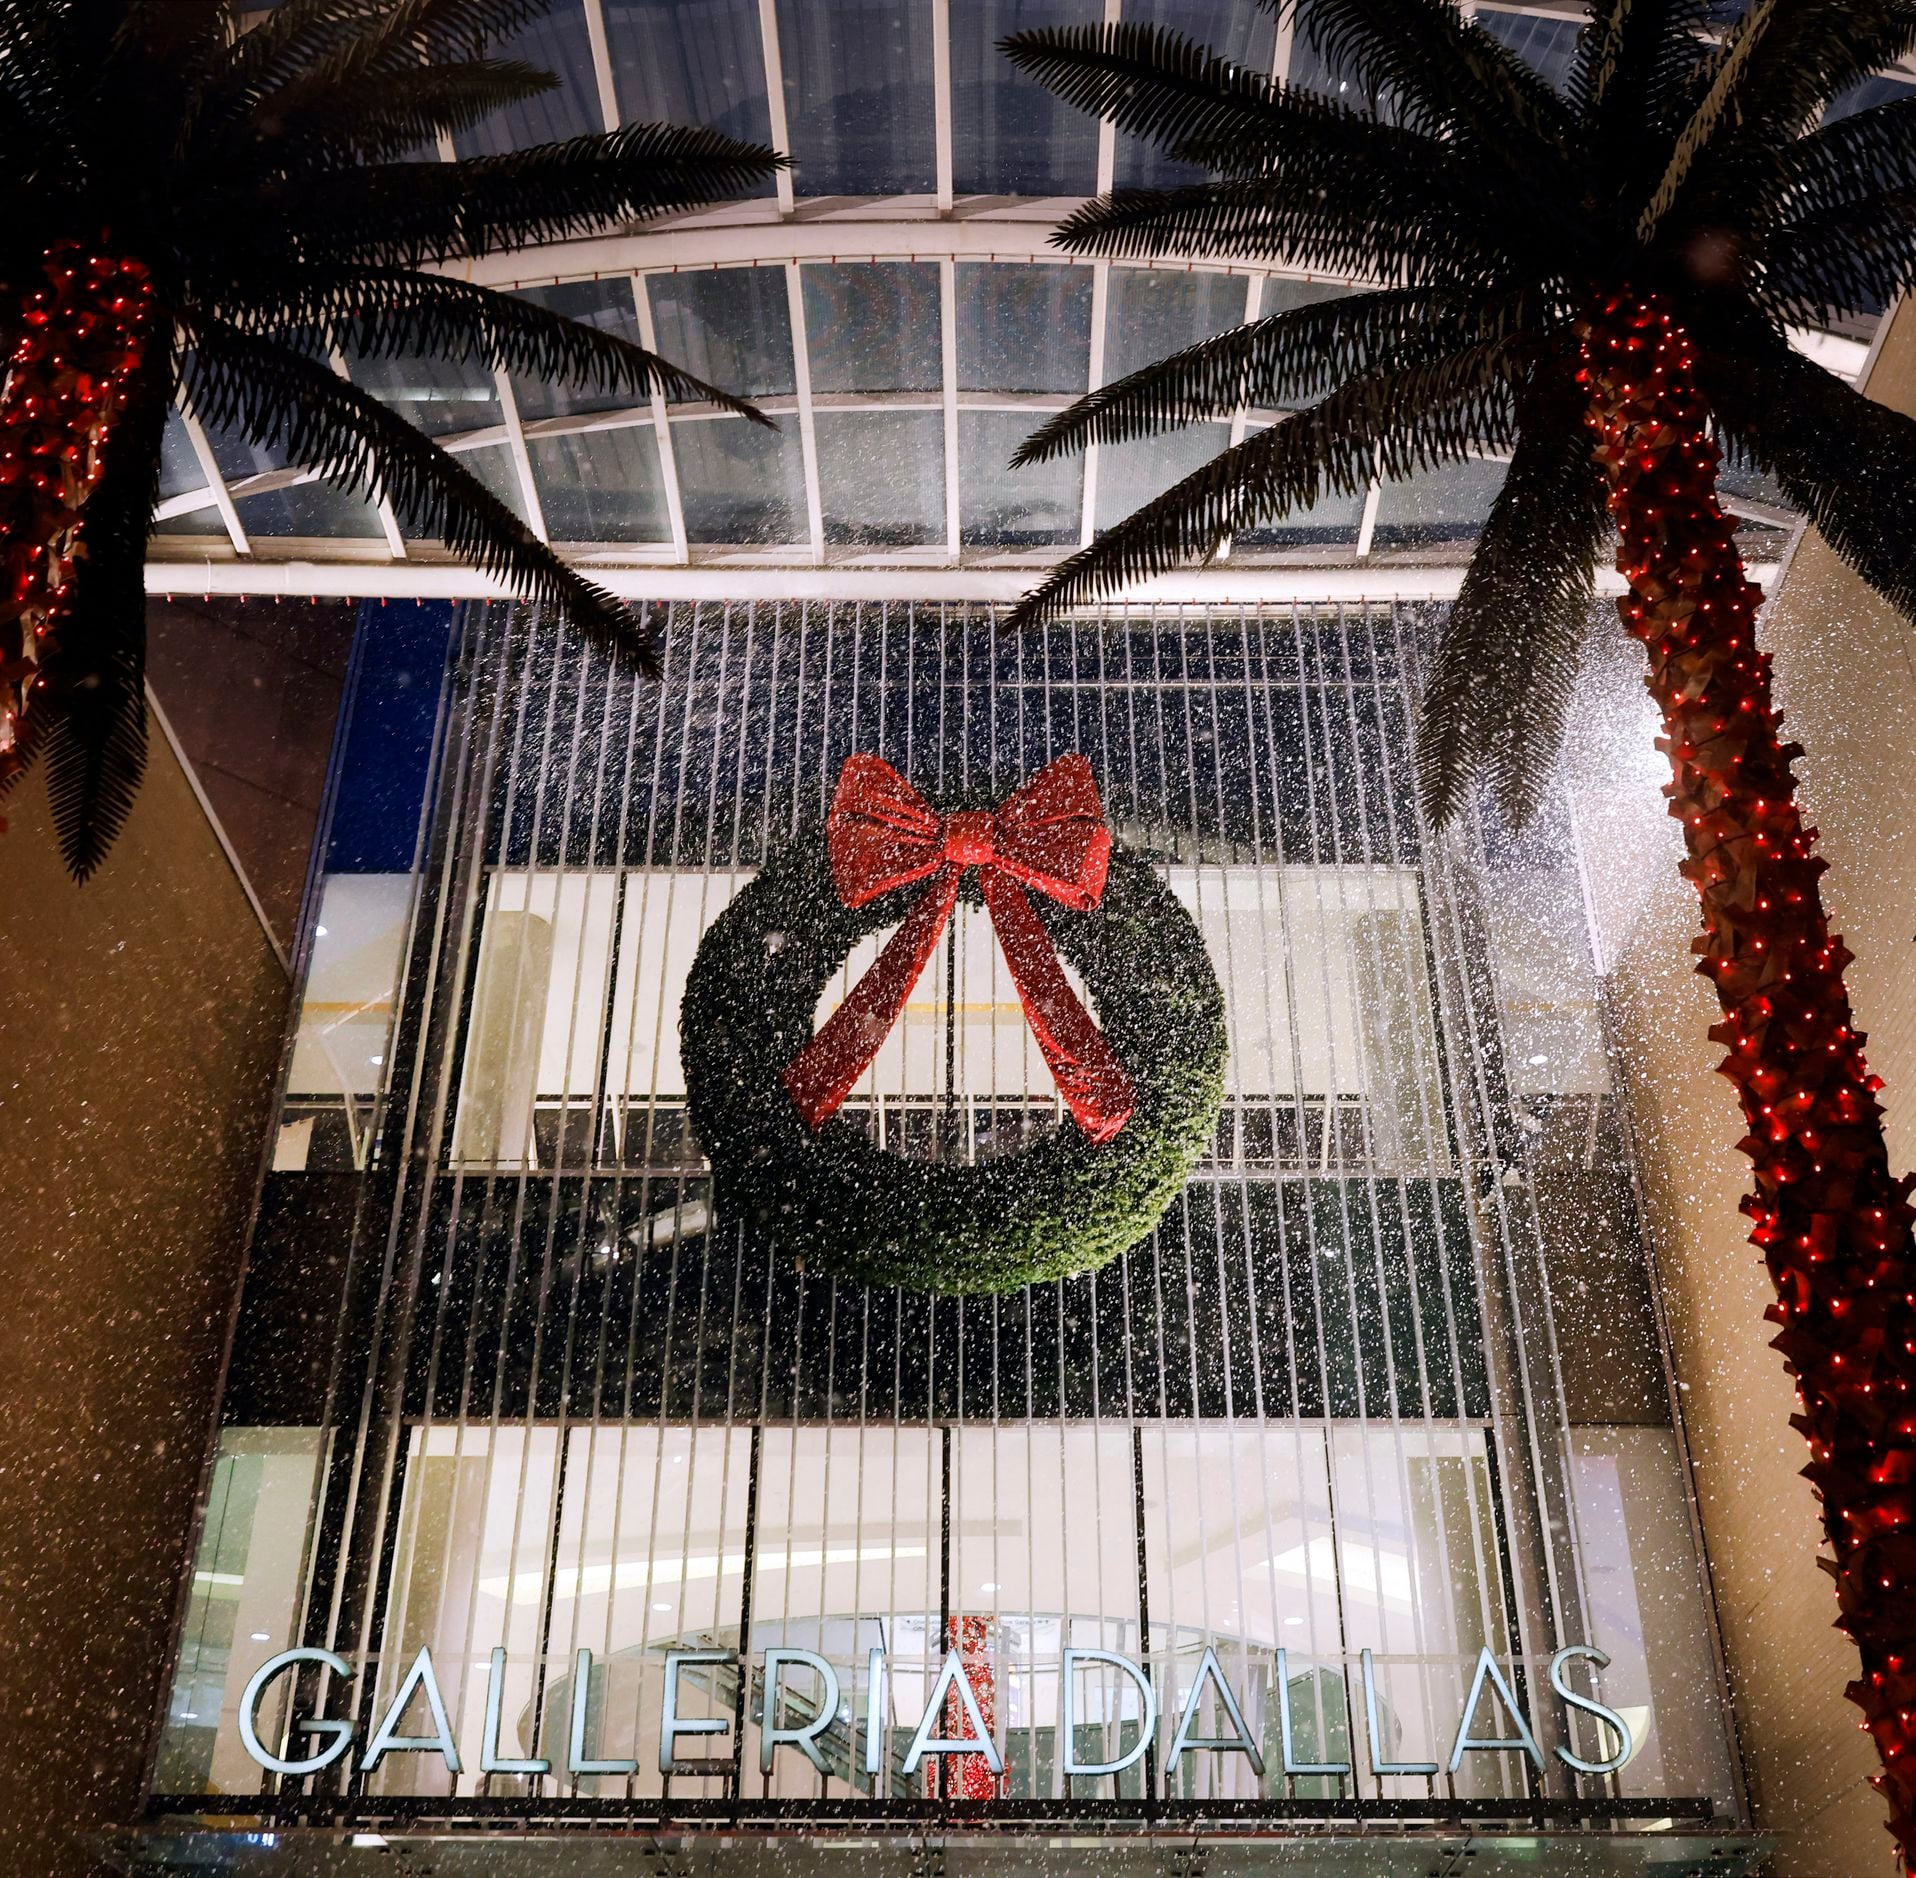 Dallas, TX - Galleria Mall - Christmas Skaters, Matt Pasant